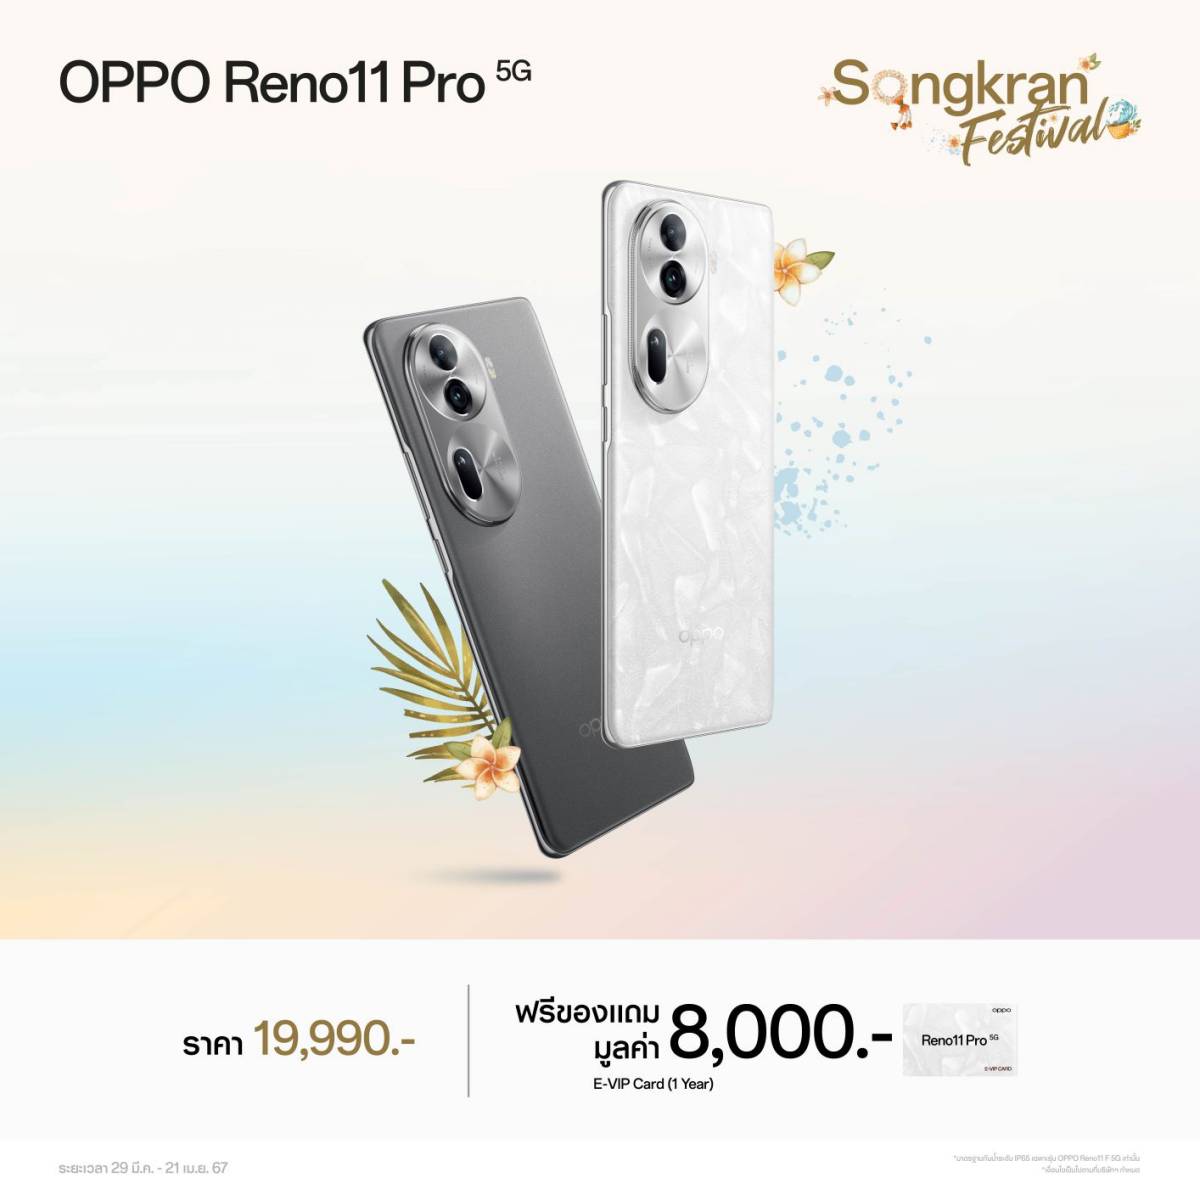 OPPO Songkran Festival - OPPO Reno11 Pro 5G